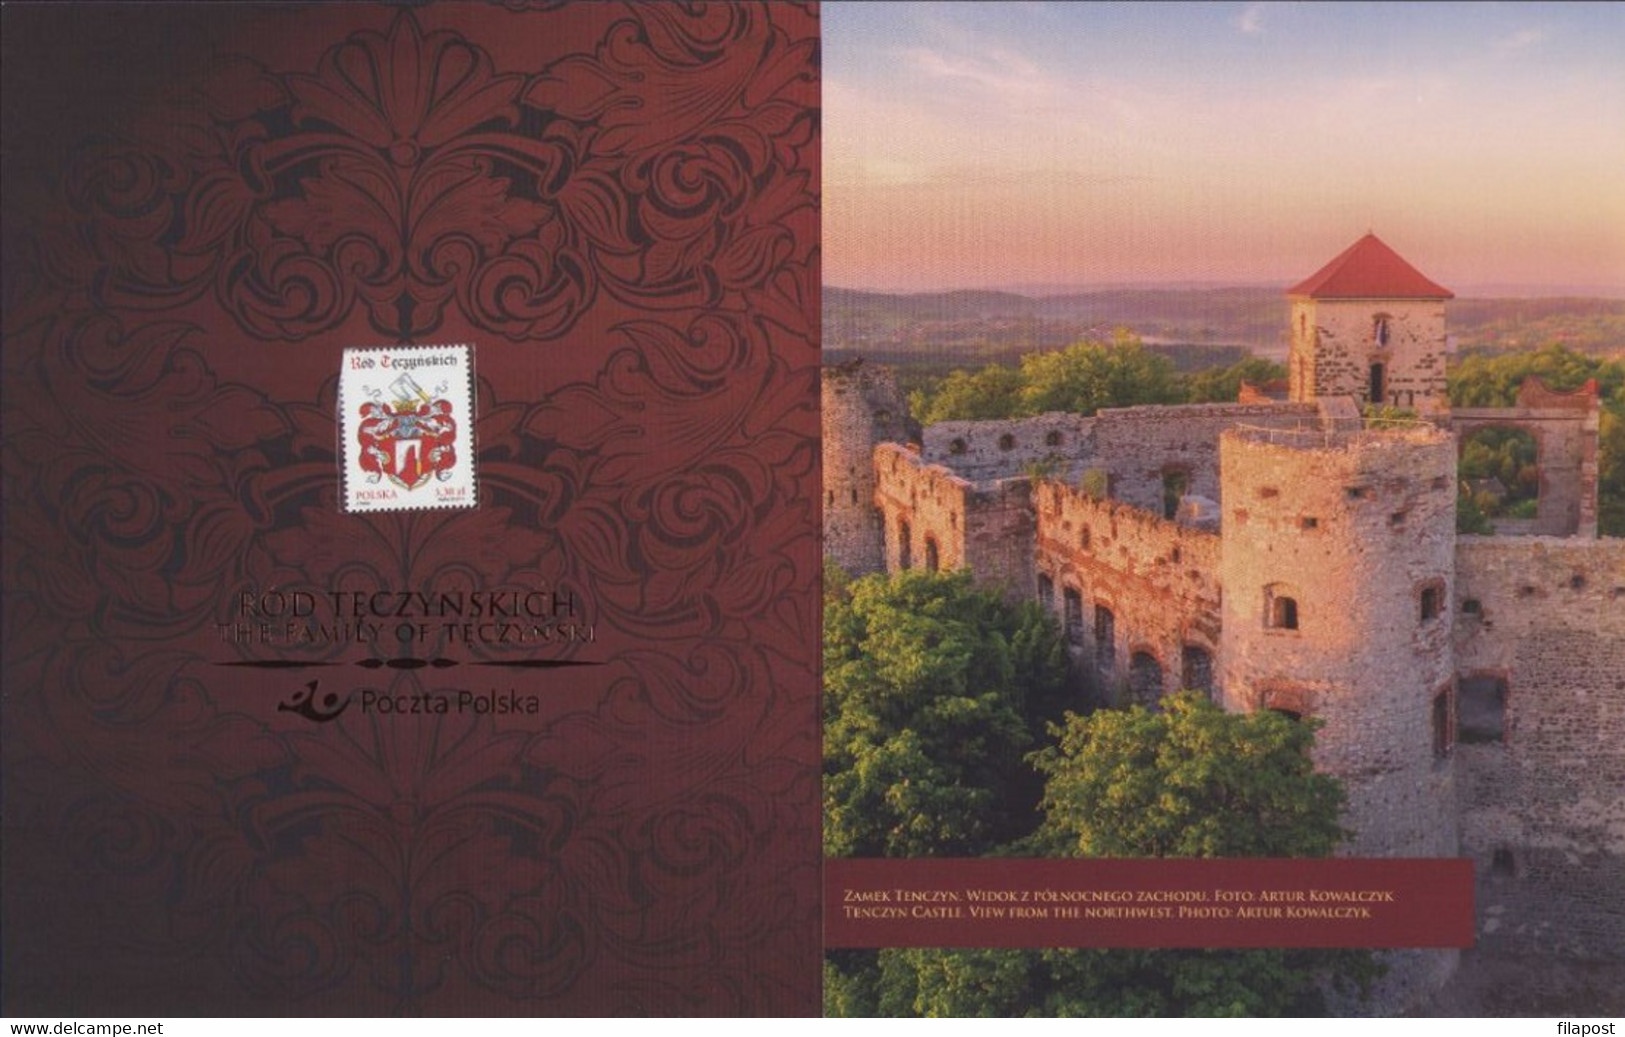 POLAND 2019 Booklet / The Family Of Teczynski, Kingdom Of Poland, Piast Dynasty, Jagiellon Dynasty / With Stamp MNH** - Carnets